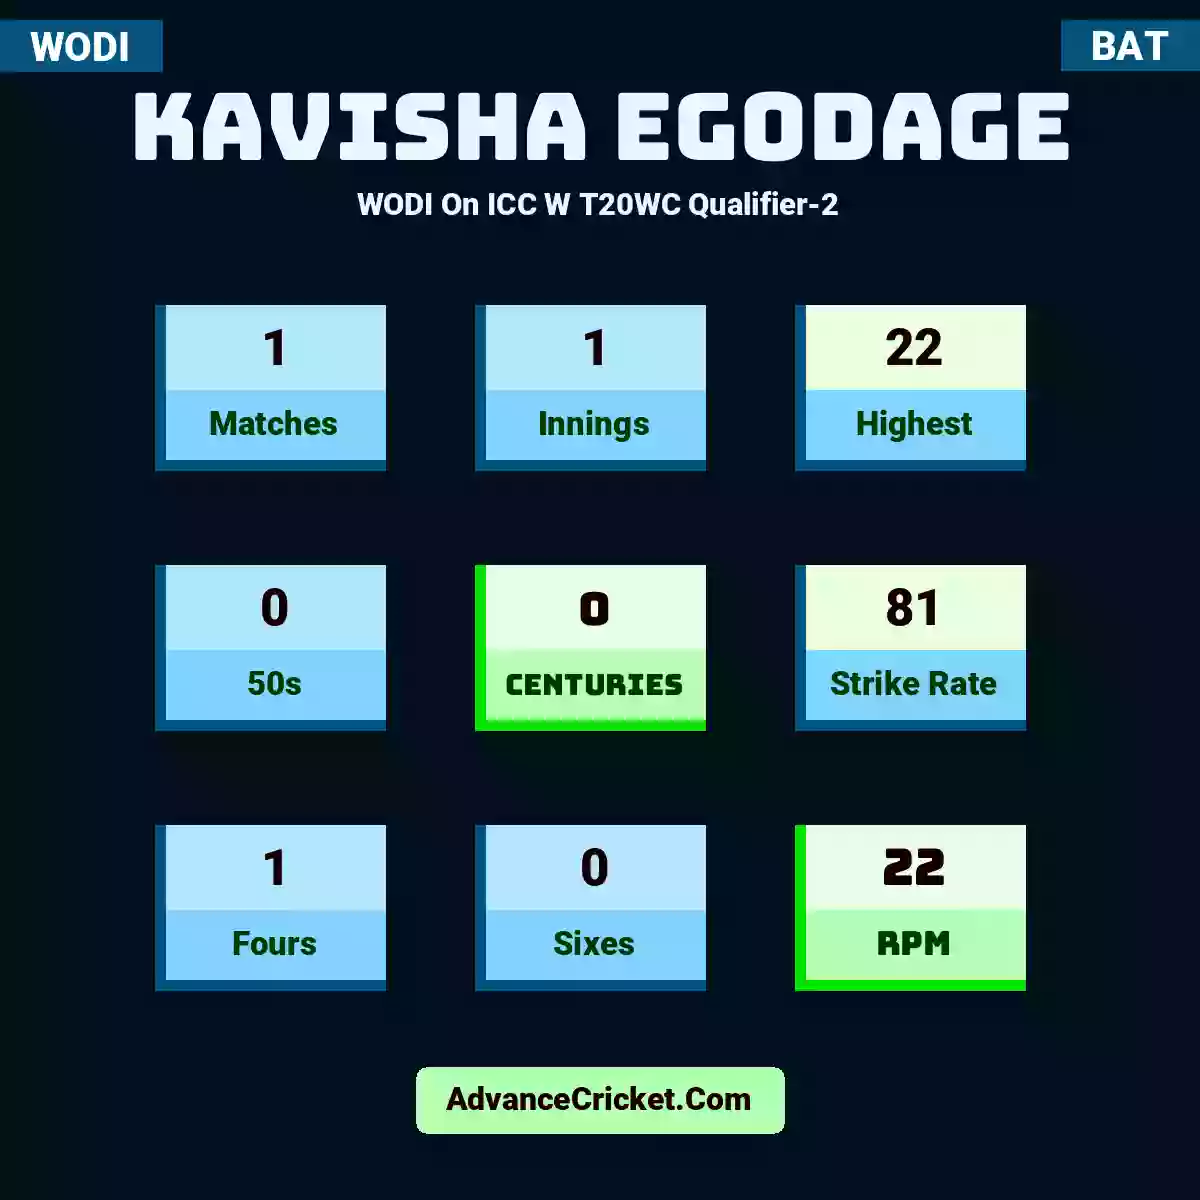 Kavisha Egodage WODI  On ICC W T20WC Qualifier-2, Kavisha Egodage played 1 matches, scored 22 runs as highest, 0 half-centuries, and 0 centuries, with a strike rate of 81. K.Egodage hit 1 fours and 0 sixes, with an RPM of 22.